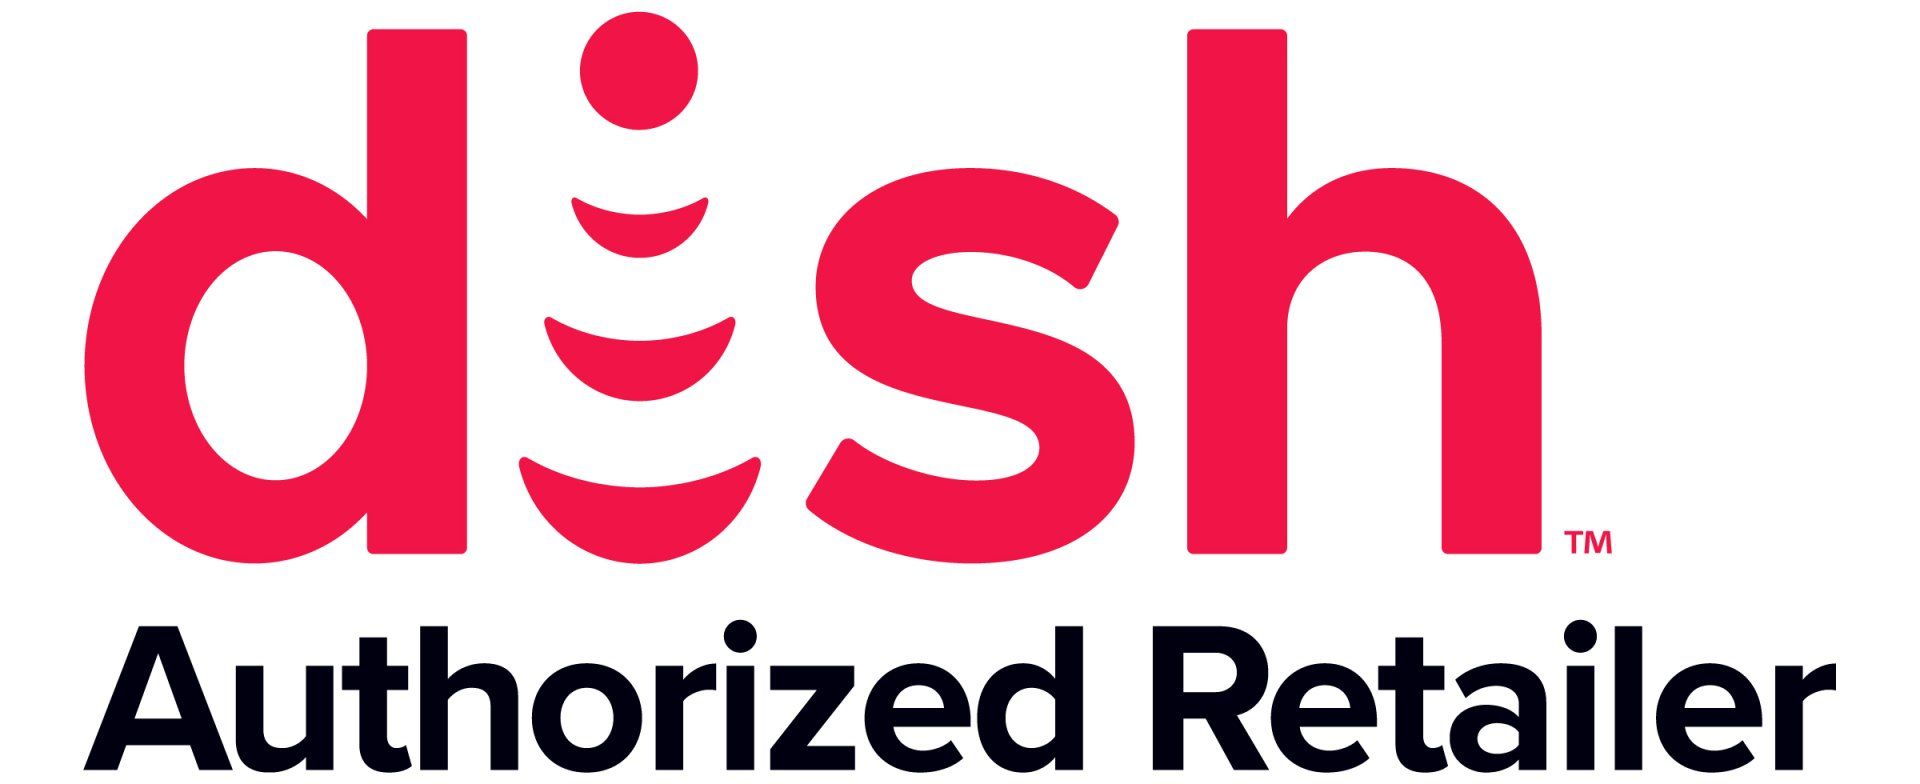 DISH TV service